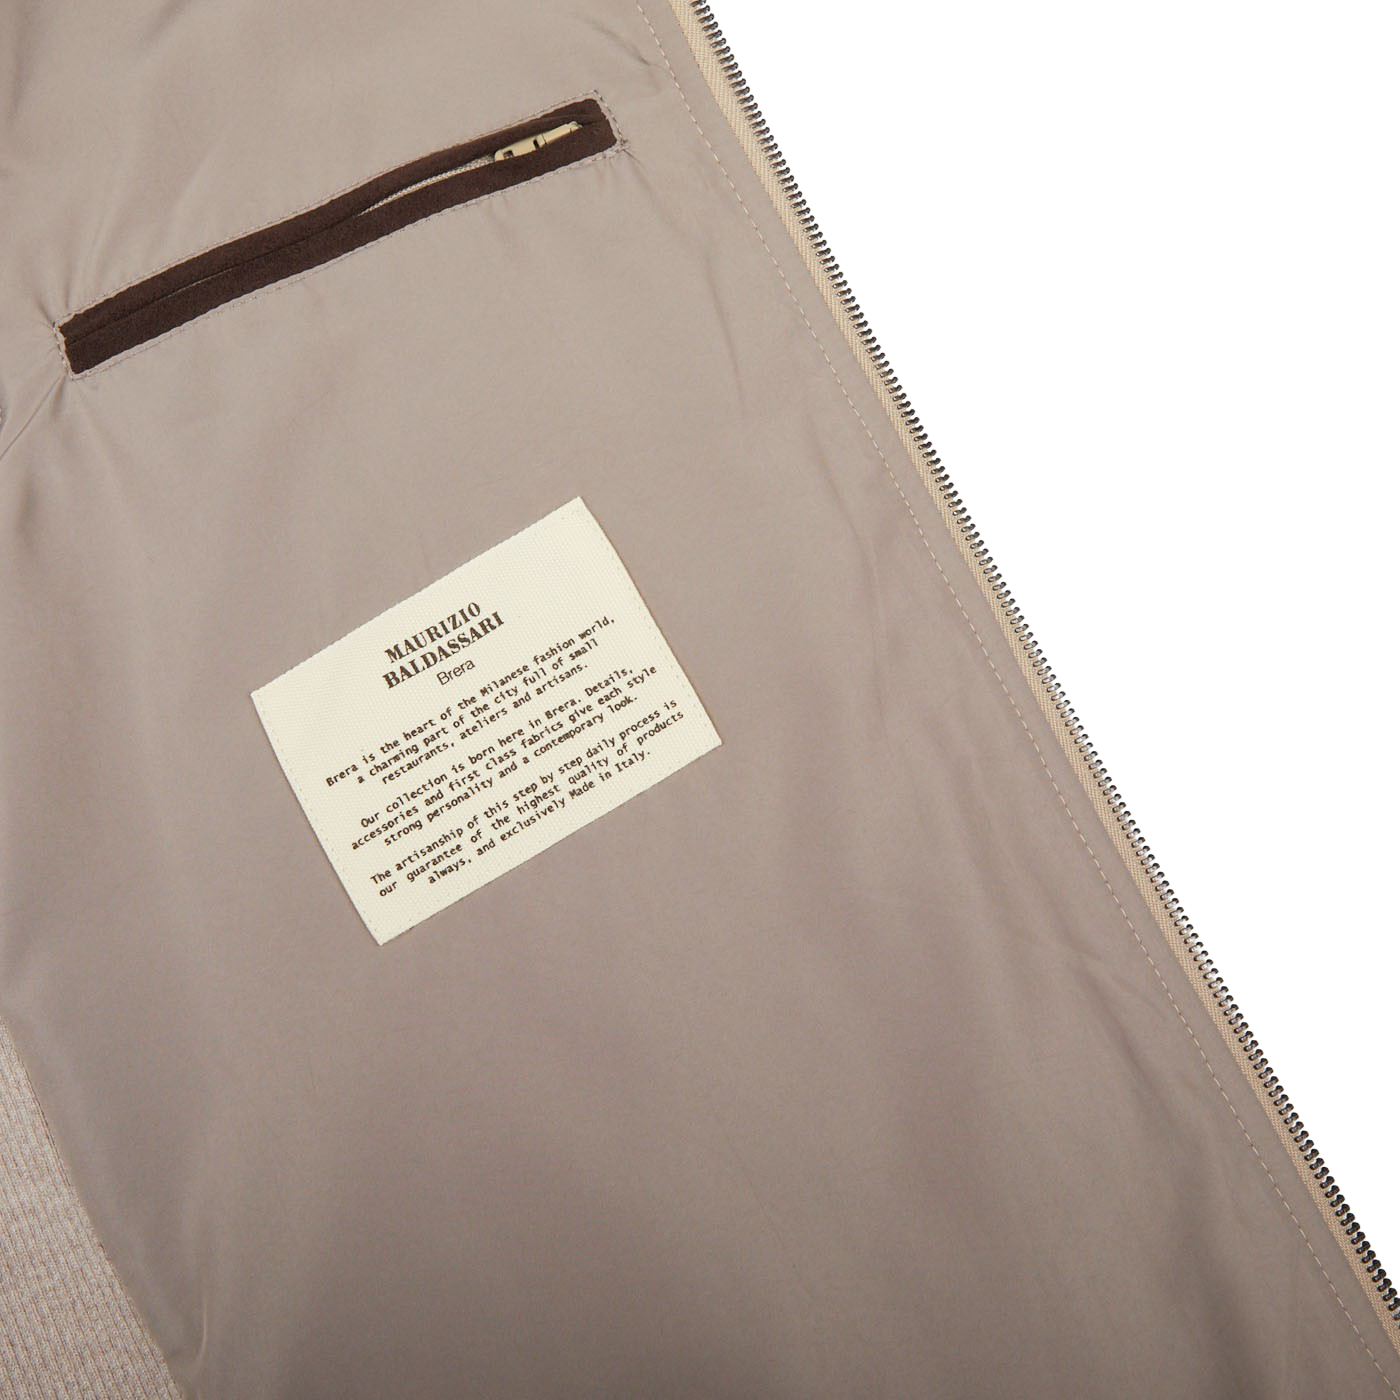 A Maurizio Baldassari Beige Water Repellent Pure Cashmere Gilet with label attached.